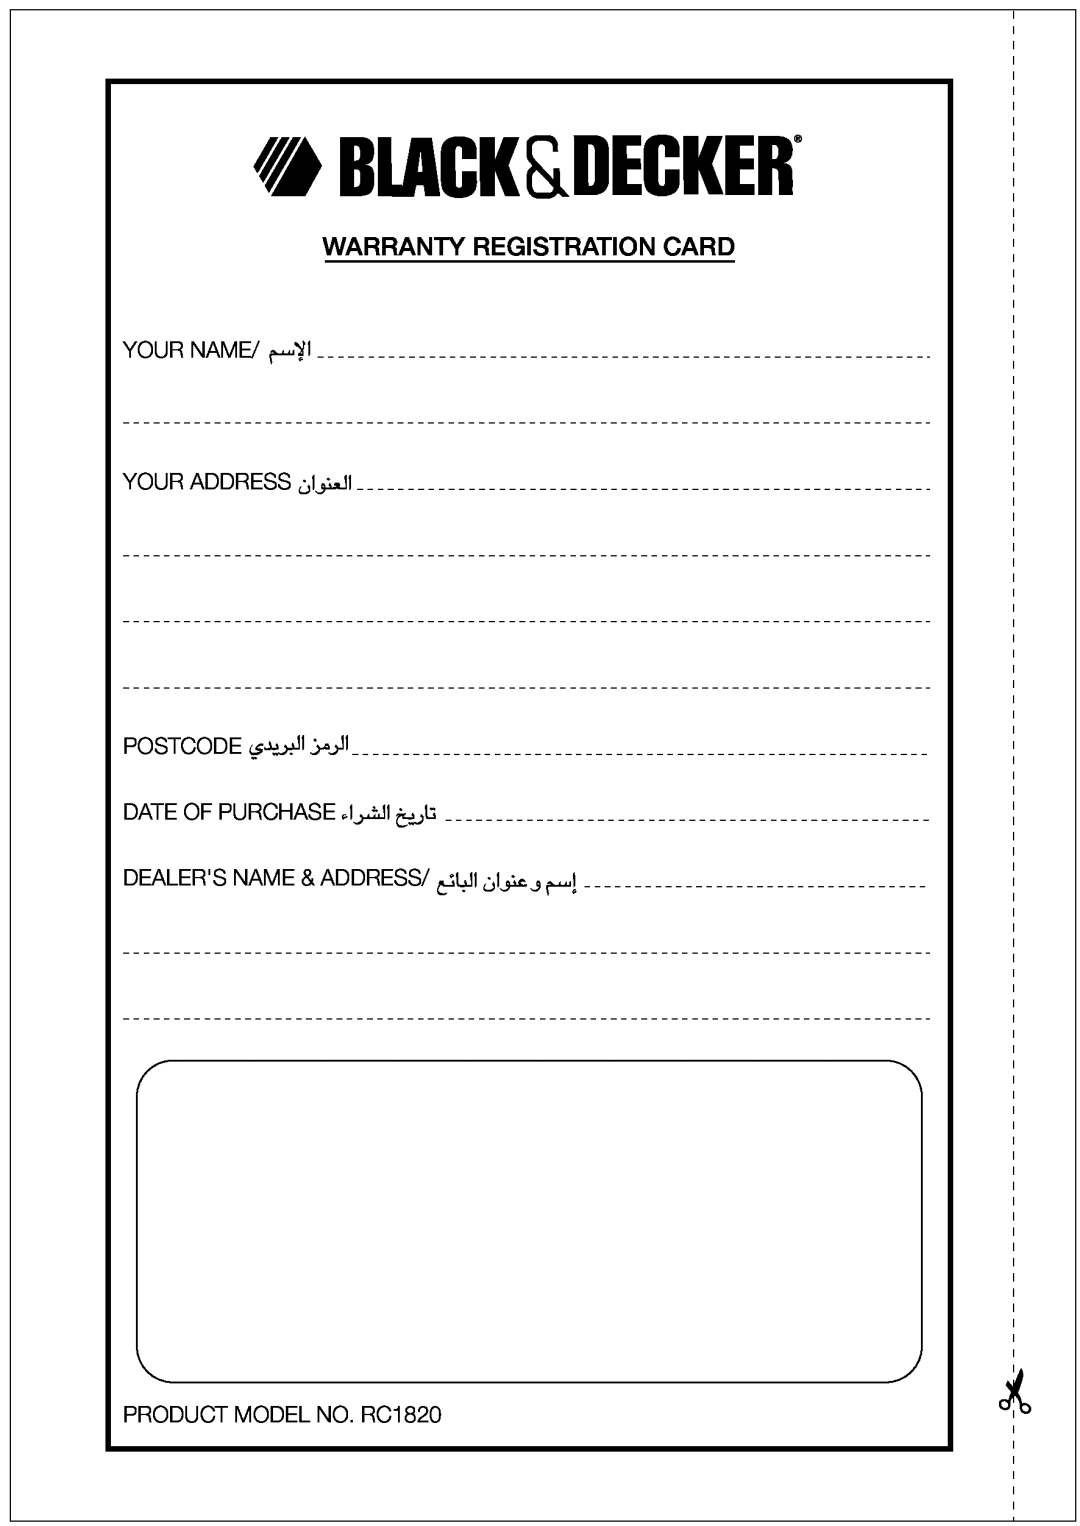 Black & Decker RC1820 manual Warranty Registration Card, «ùßr, d¥bÍ∞∂« d±e∞«, Uzl∞∂« ´Mu«Ê Ë ßr≈, Postcode 